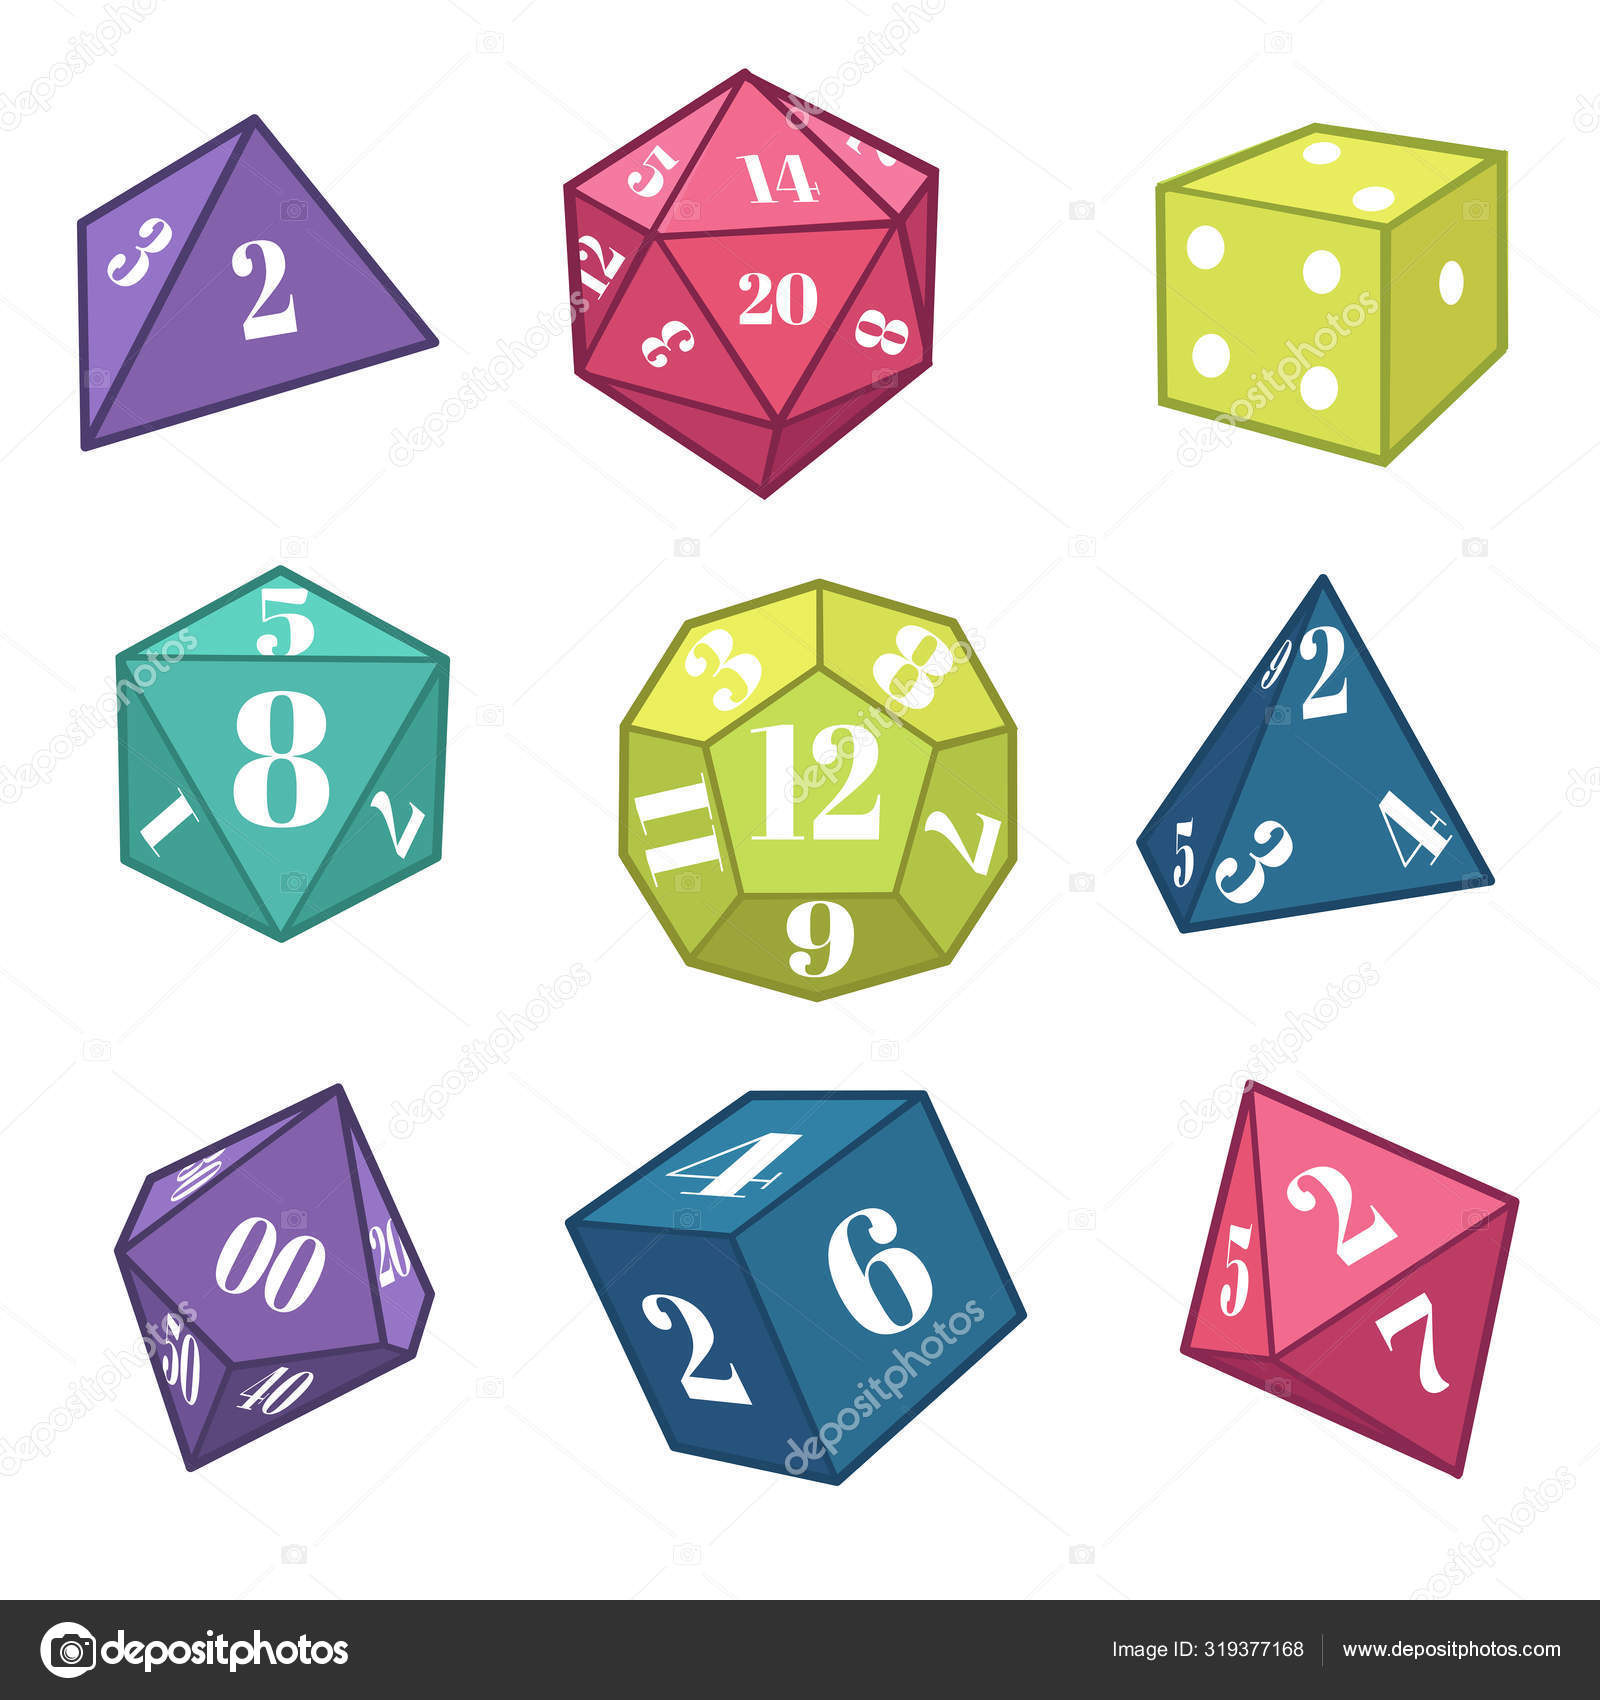 RPG,Conjunto dados fácil ler - poliedro colorido com olhos